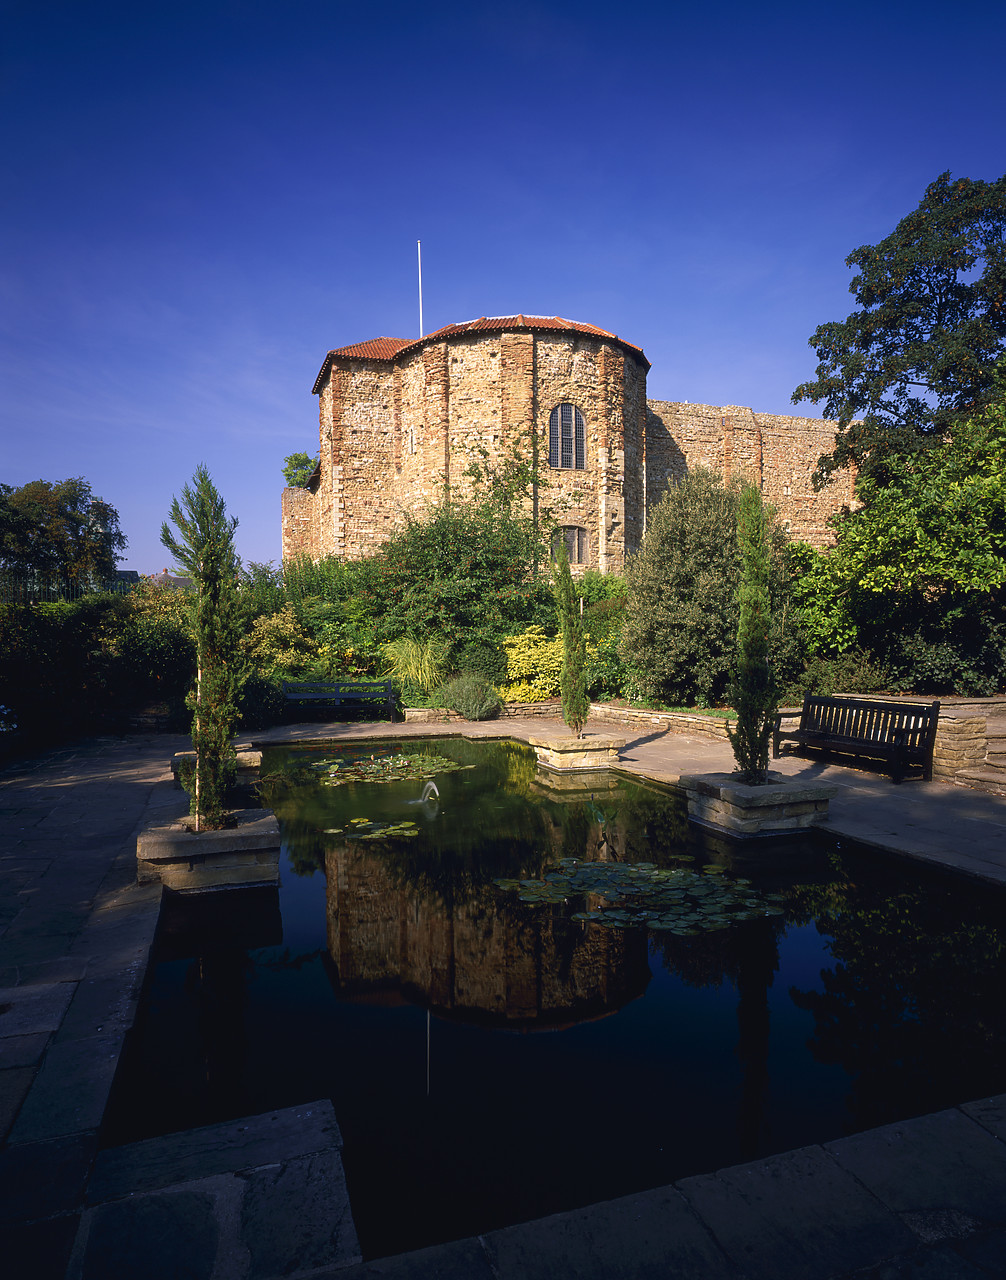 #966163-6 - Colchester Castle, Essex, England